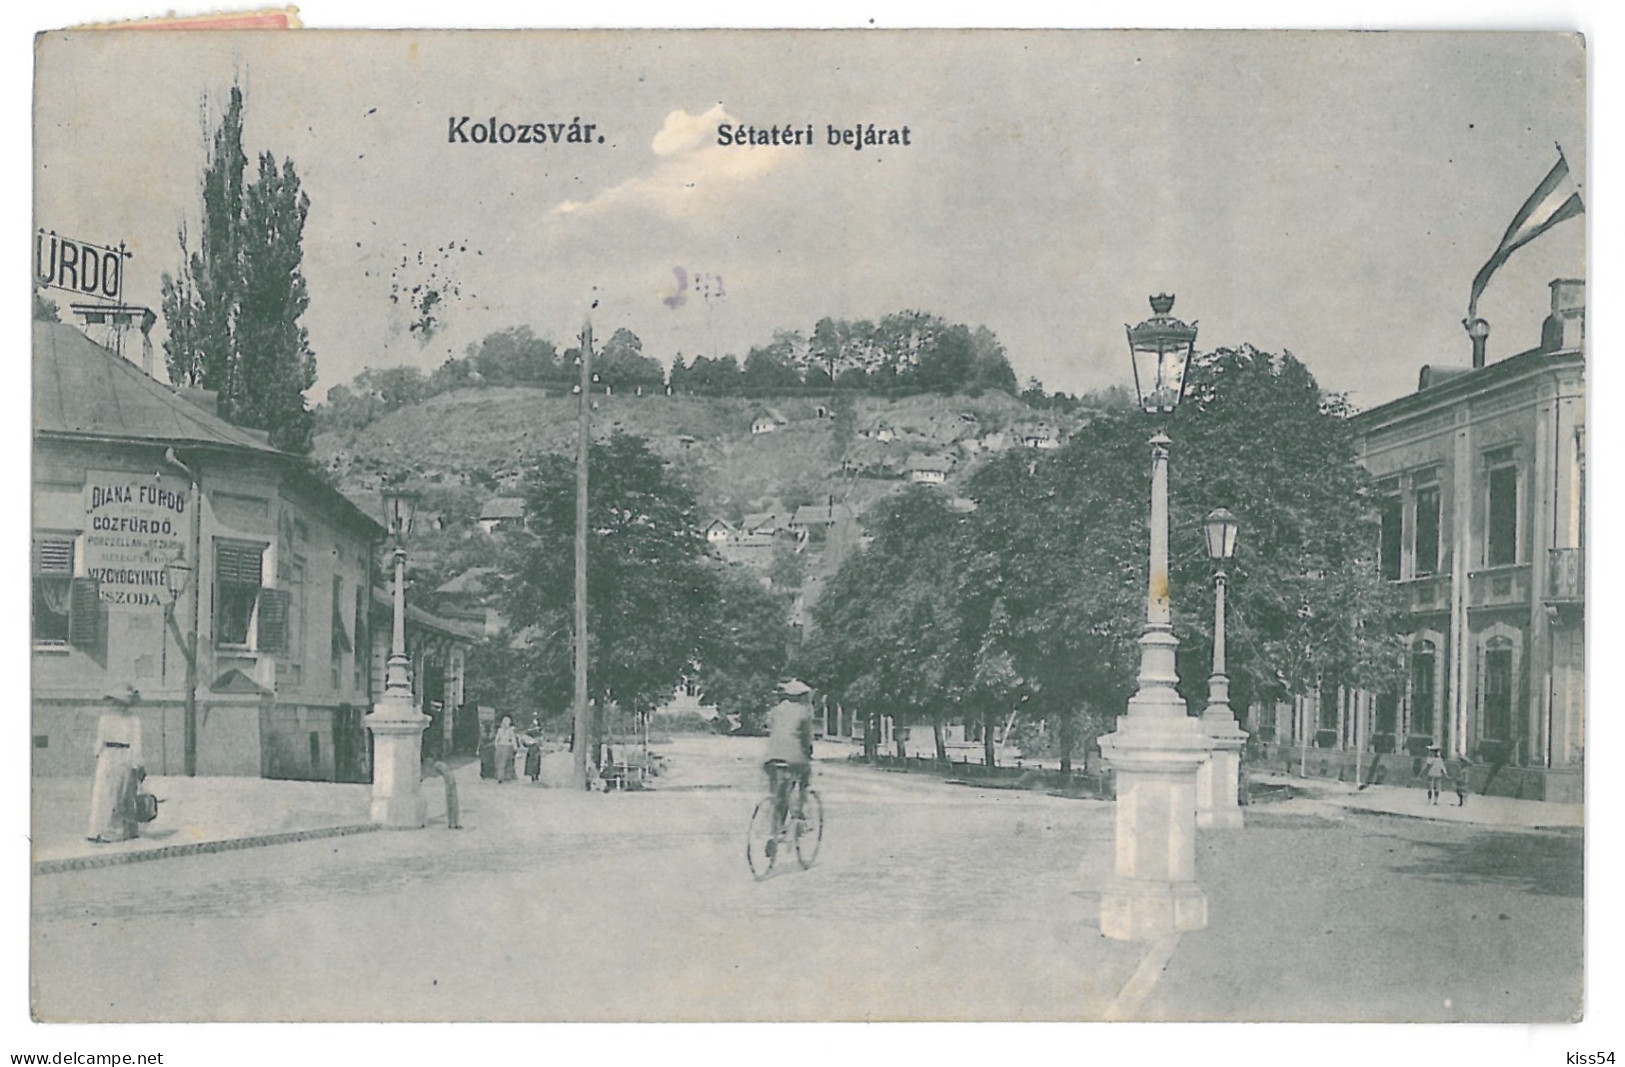 RO 89 - 14902 CLUJ, Bike, Romania - Old Postcard - Used - 1916 - Roemenië